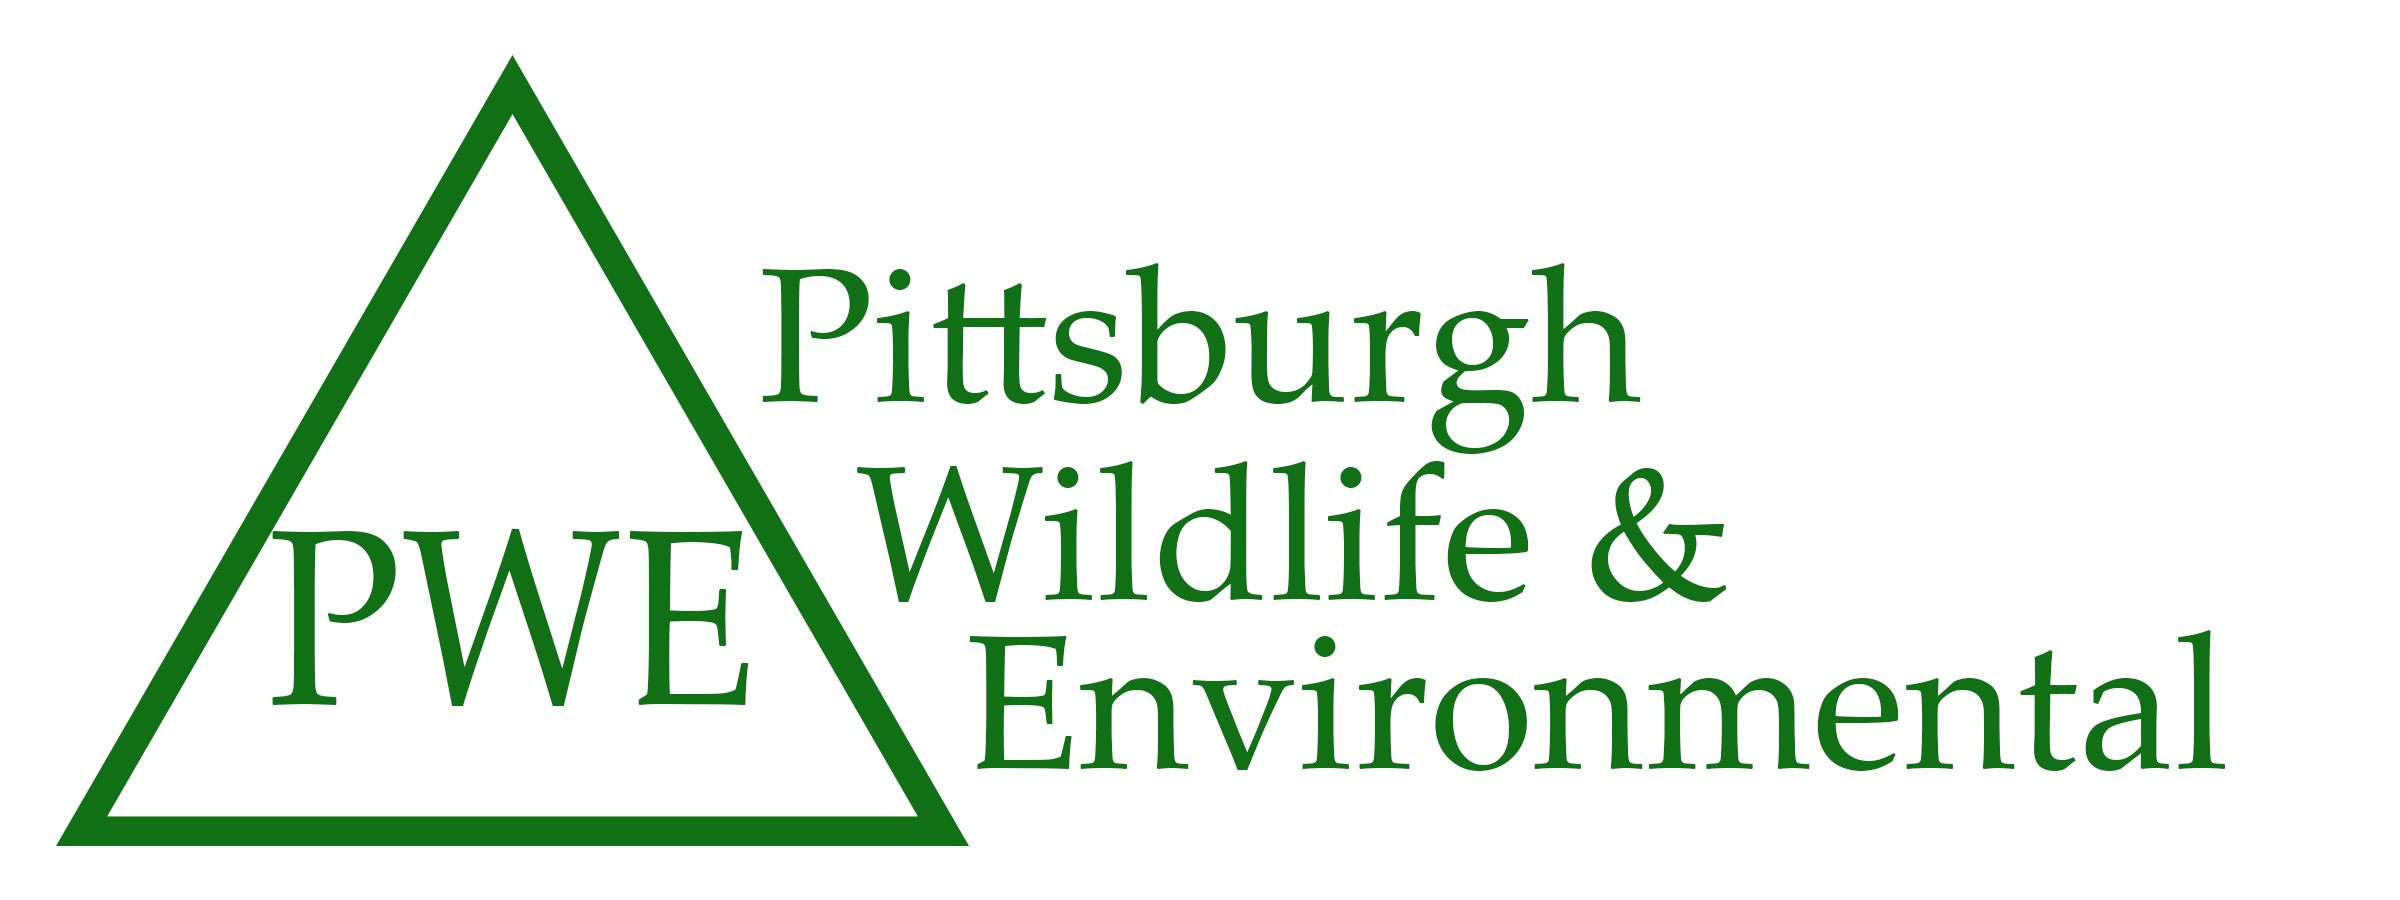 Pittsburgh Wildlife & Environmental, Inc.